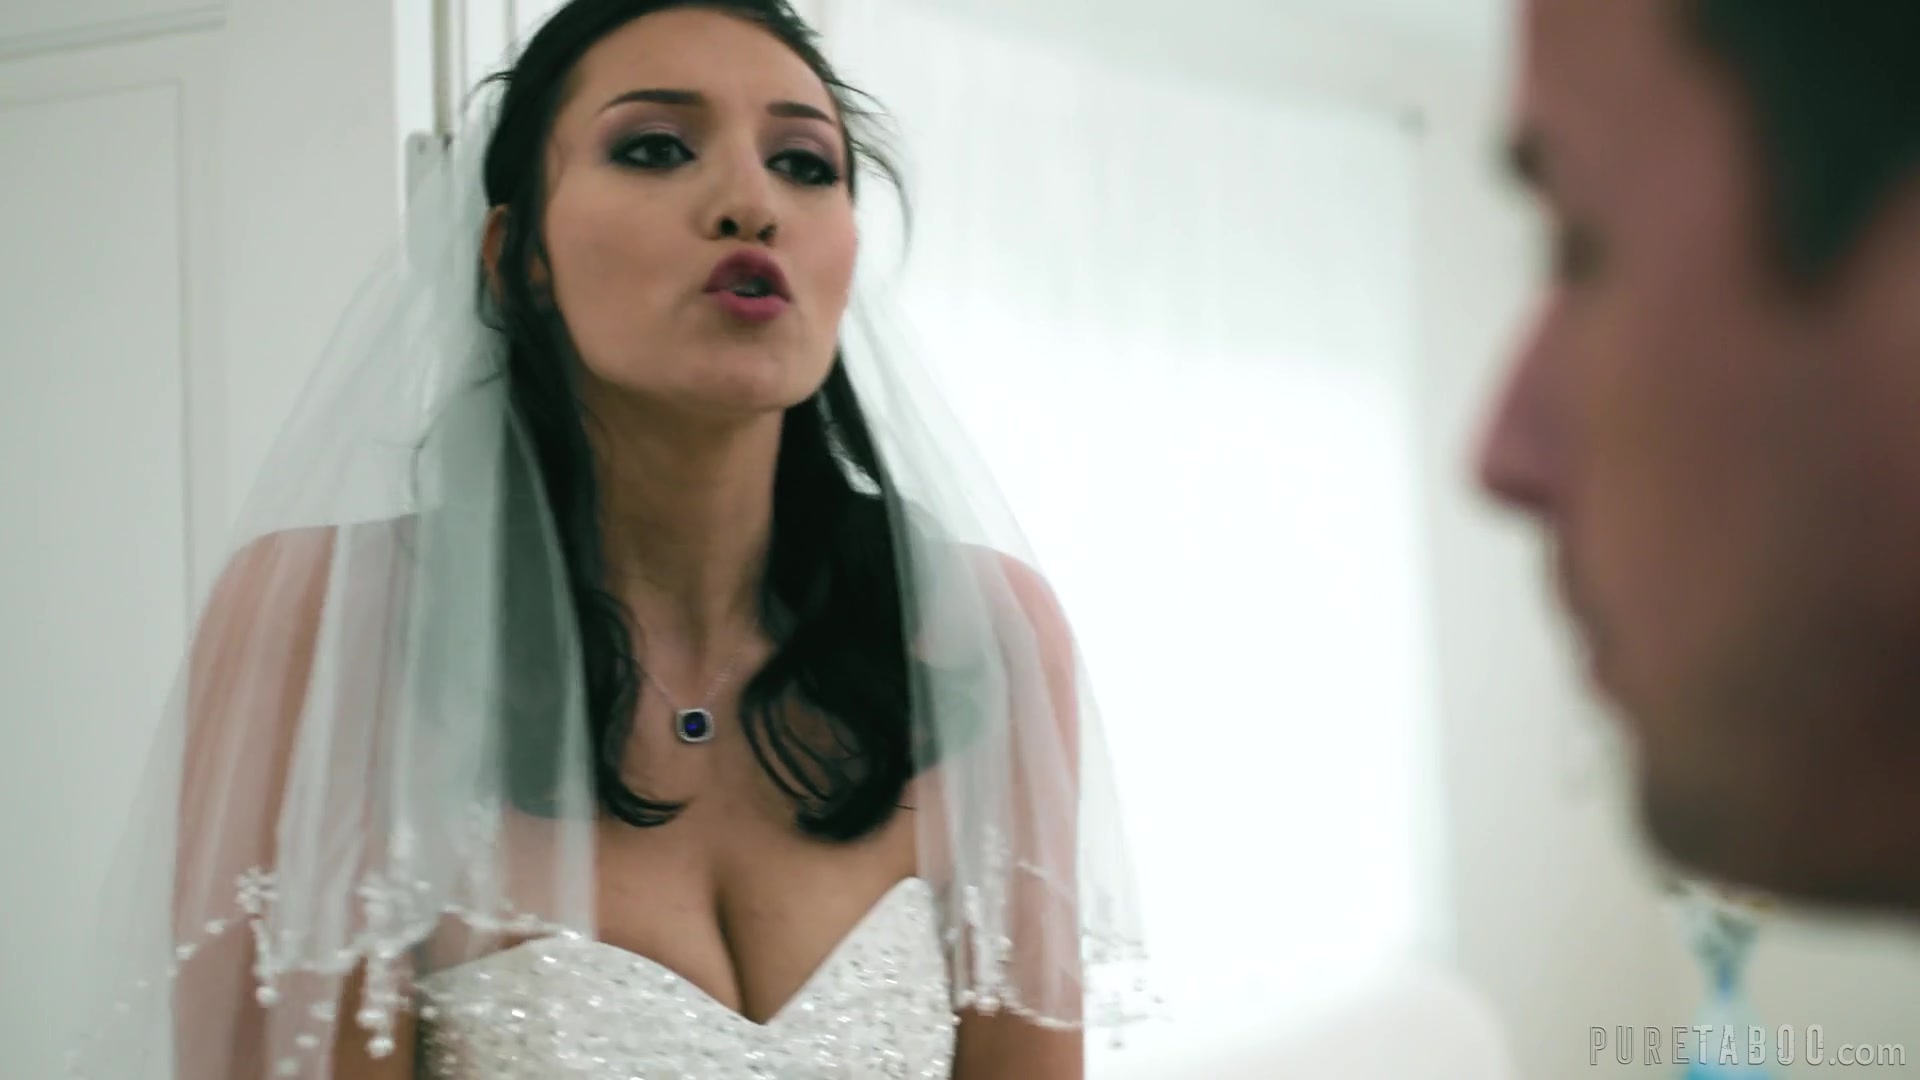 Filthy bride Bella Rolland gets banged on the wedding image